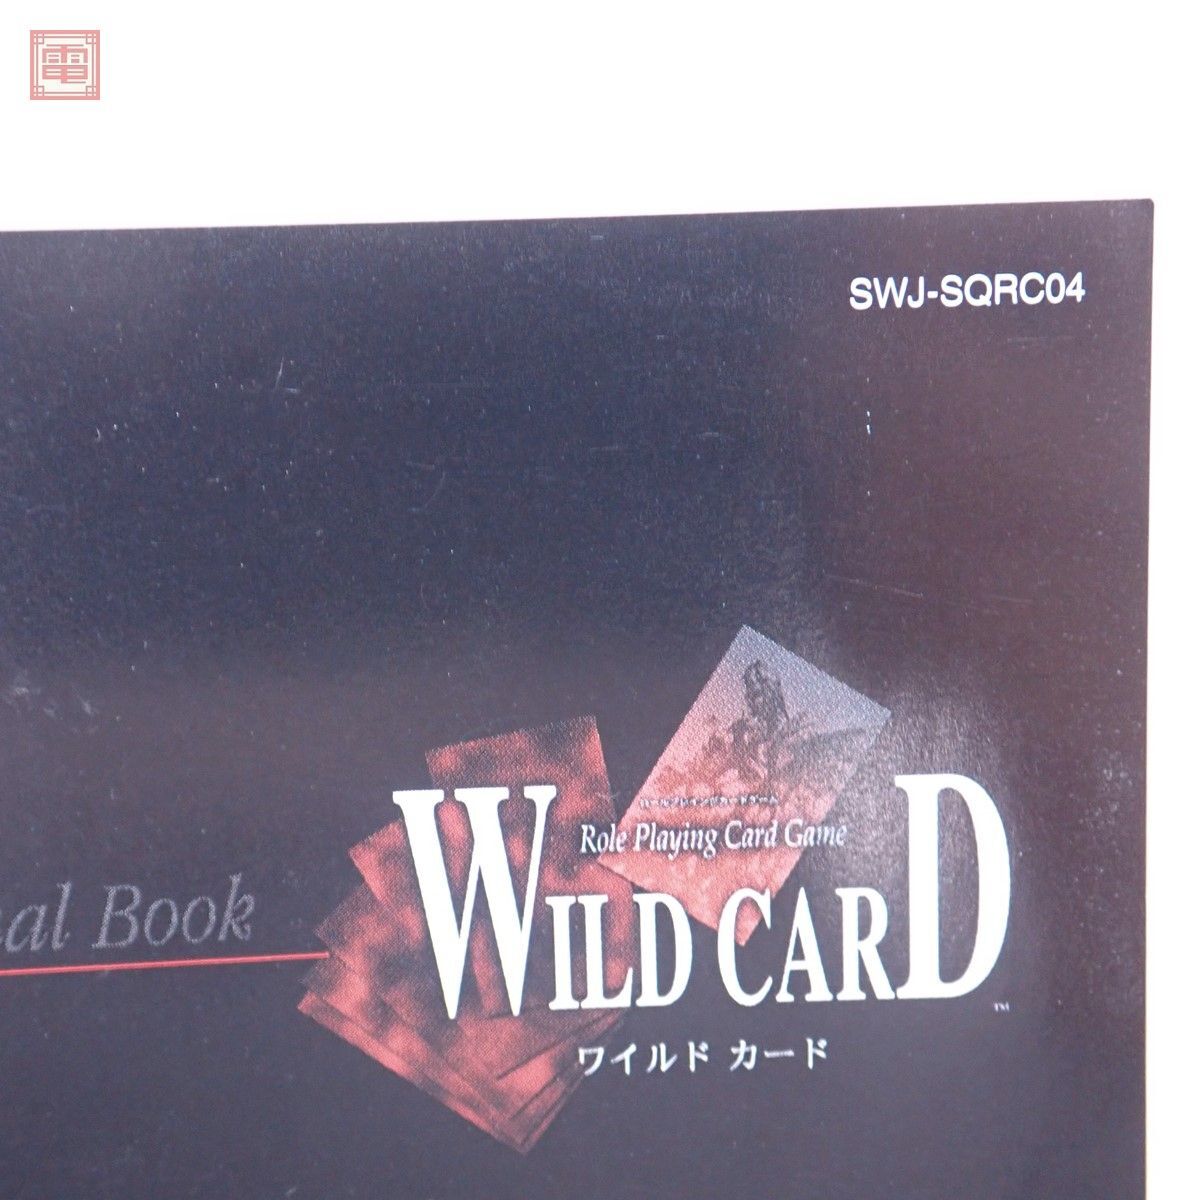  operation guarantee goods WSC WonderSwan color wild card WILD CARDsk wear SQUARESOFT box opinion post card attaching [10